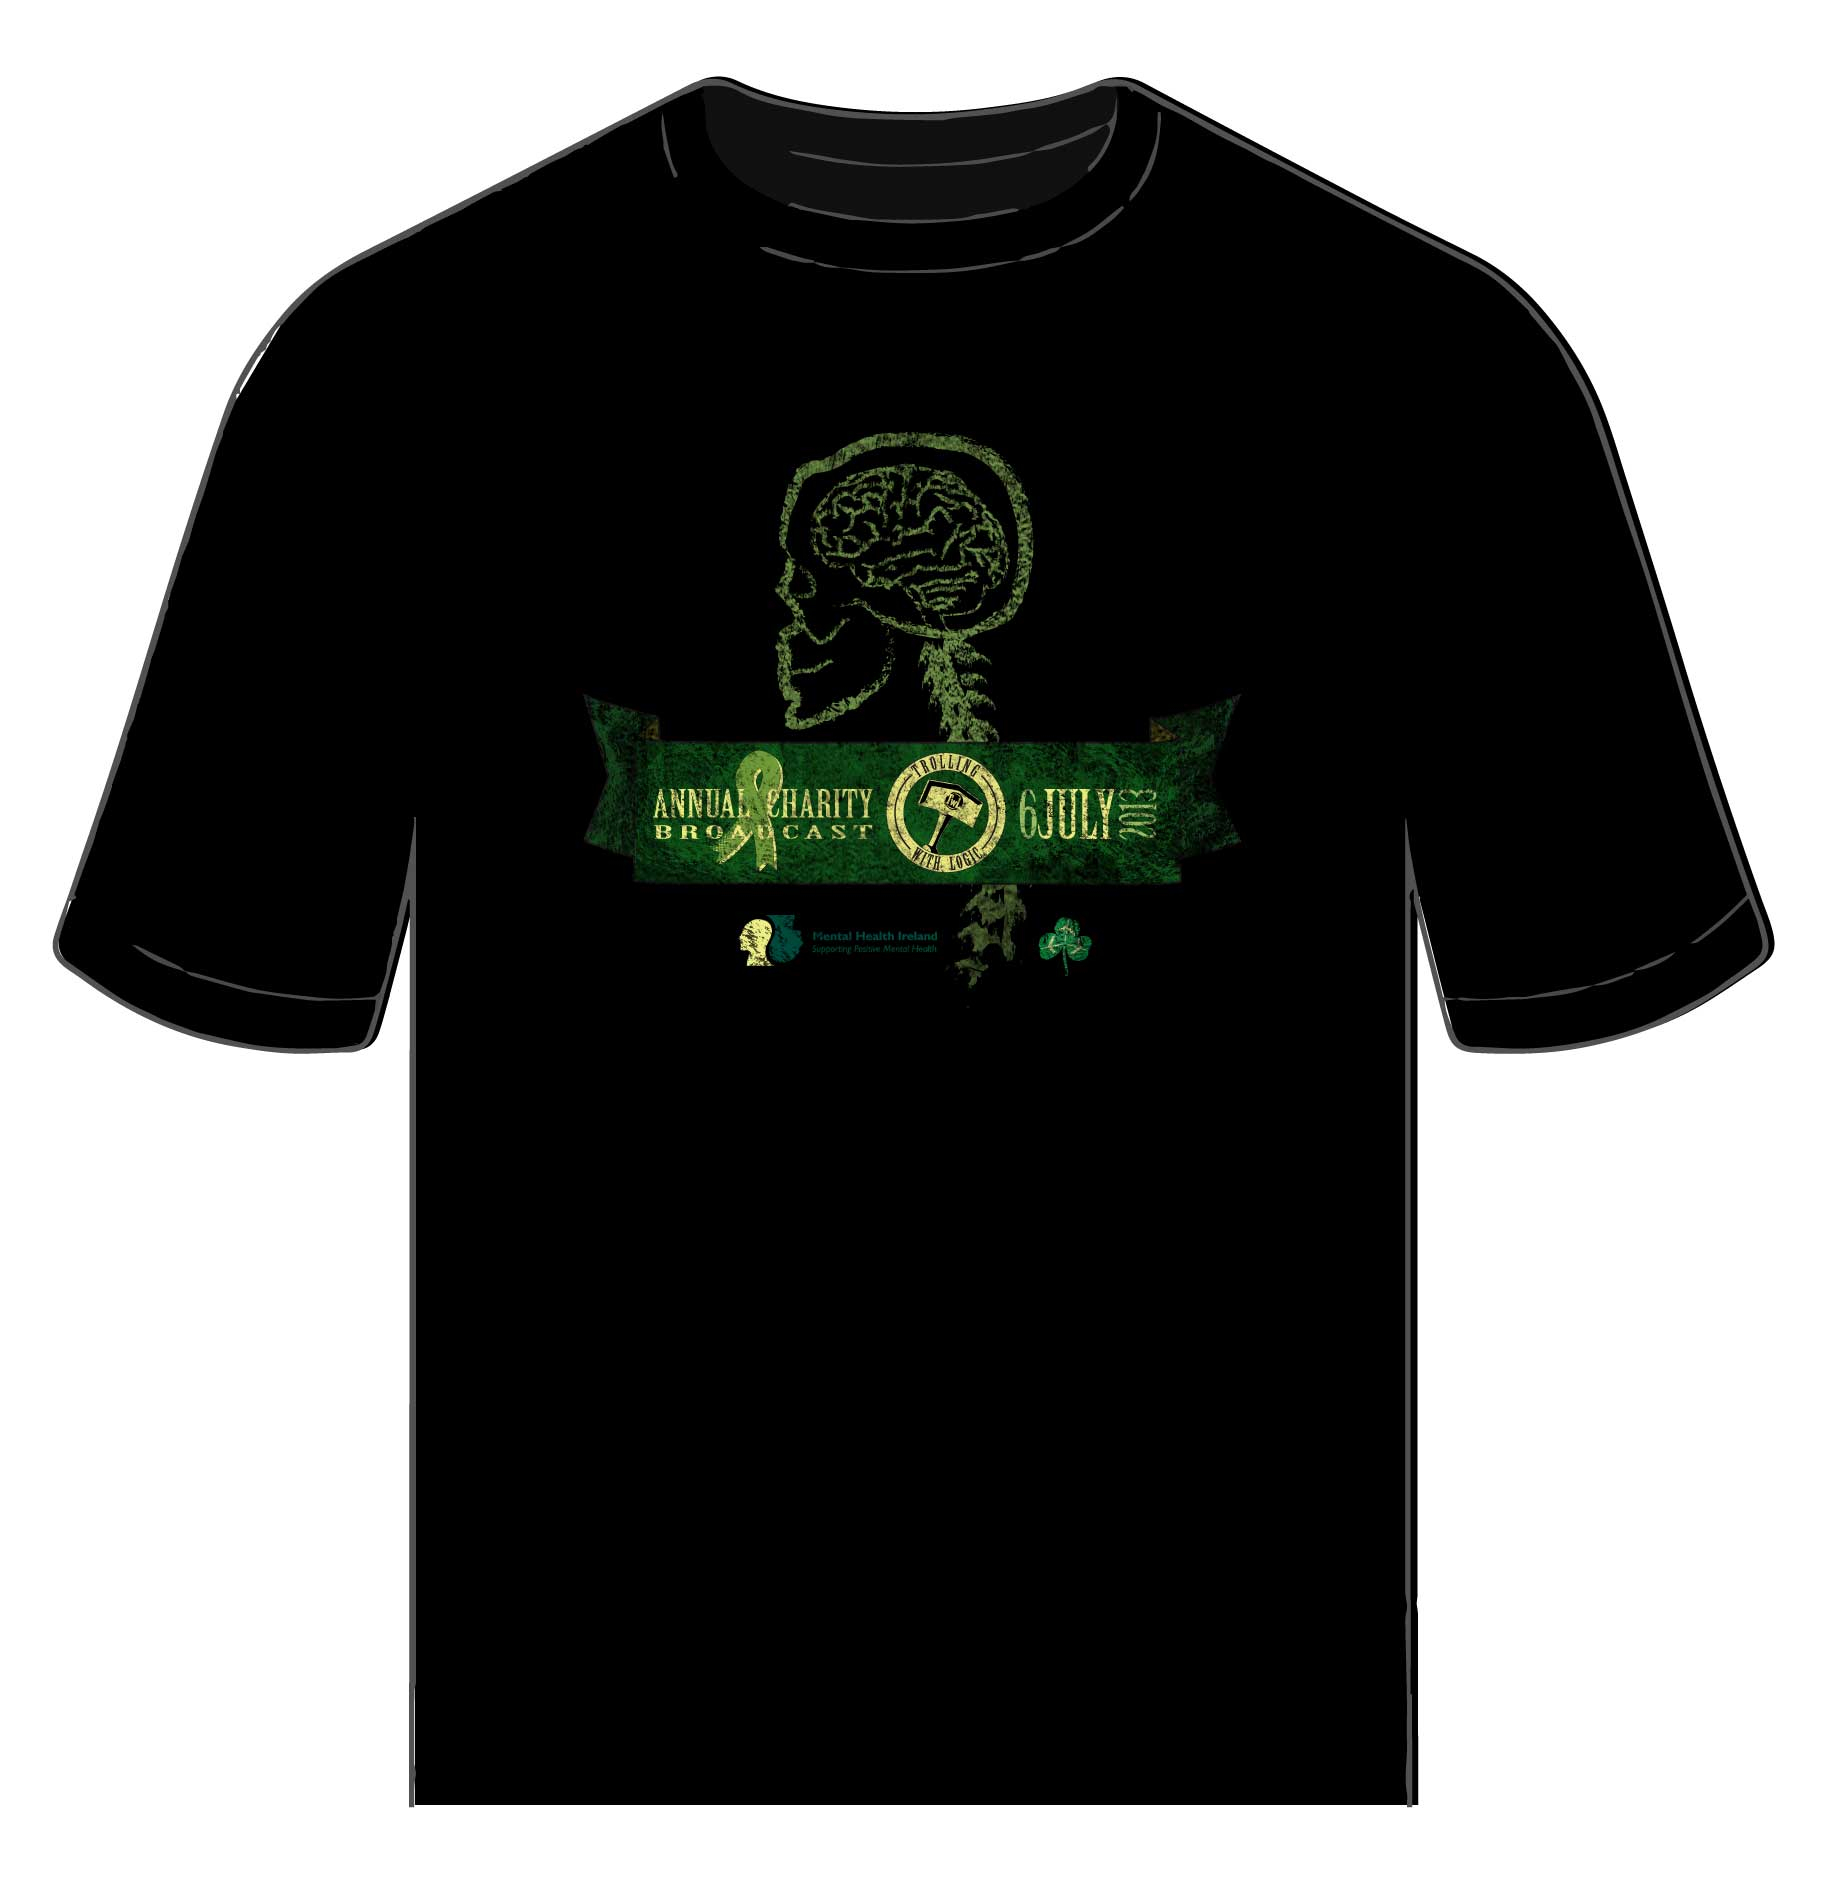 Charity-t-shirt-design